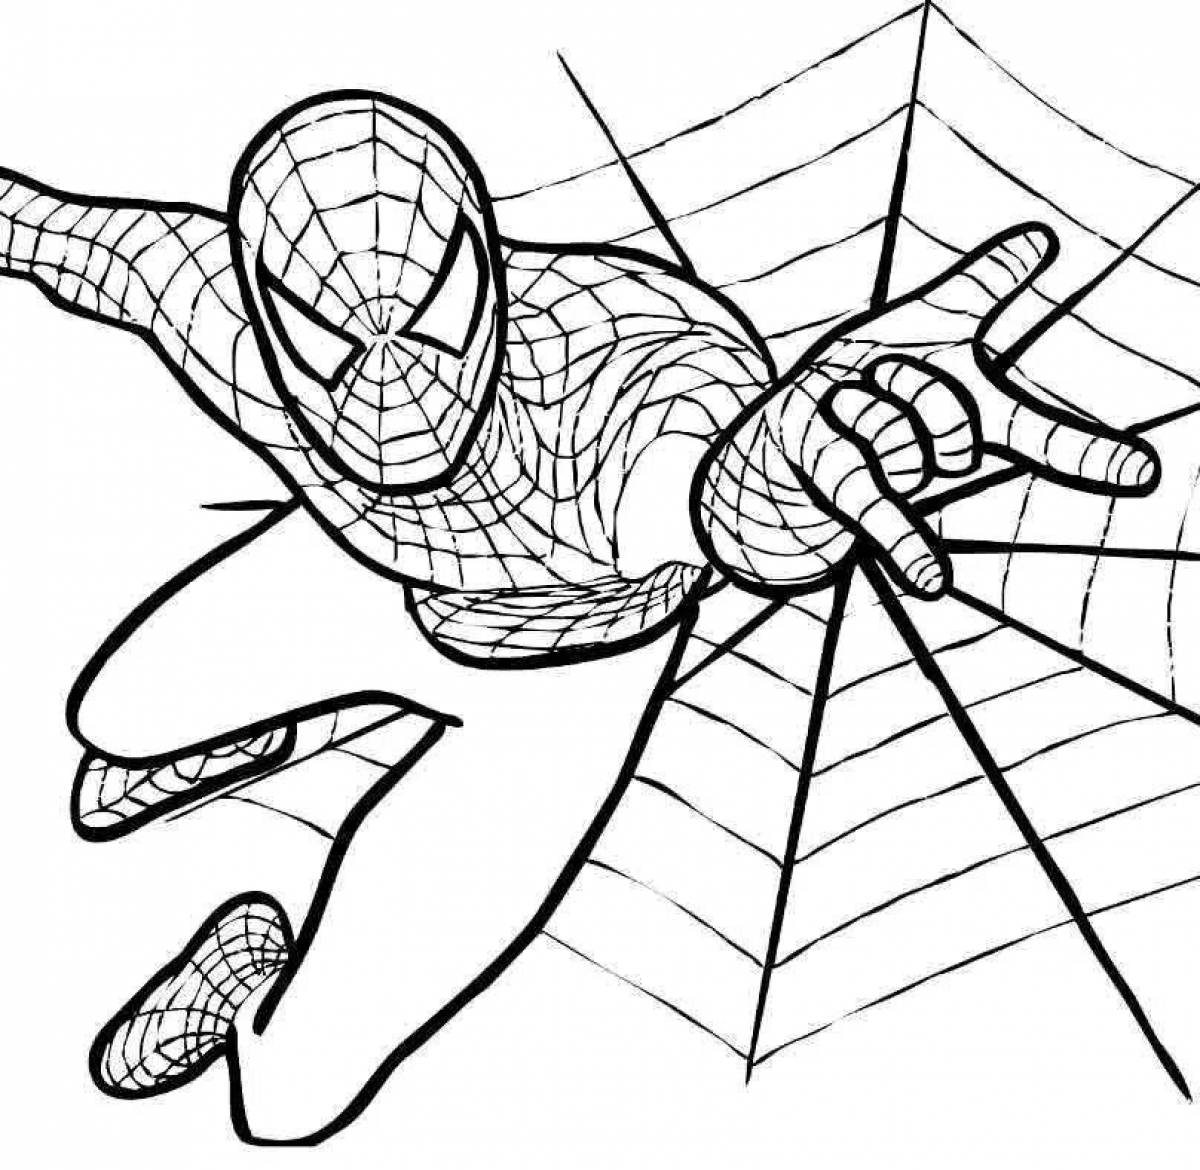 Joyful little spiderman